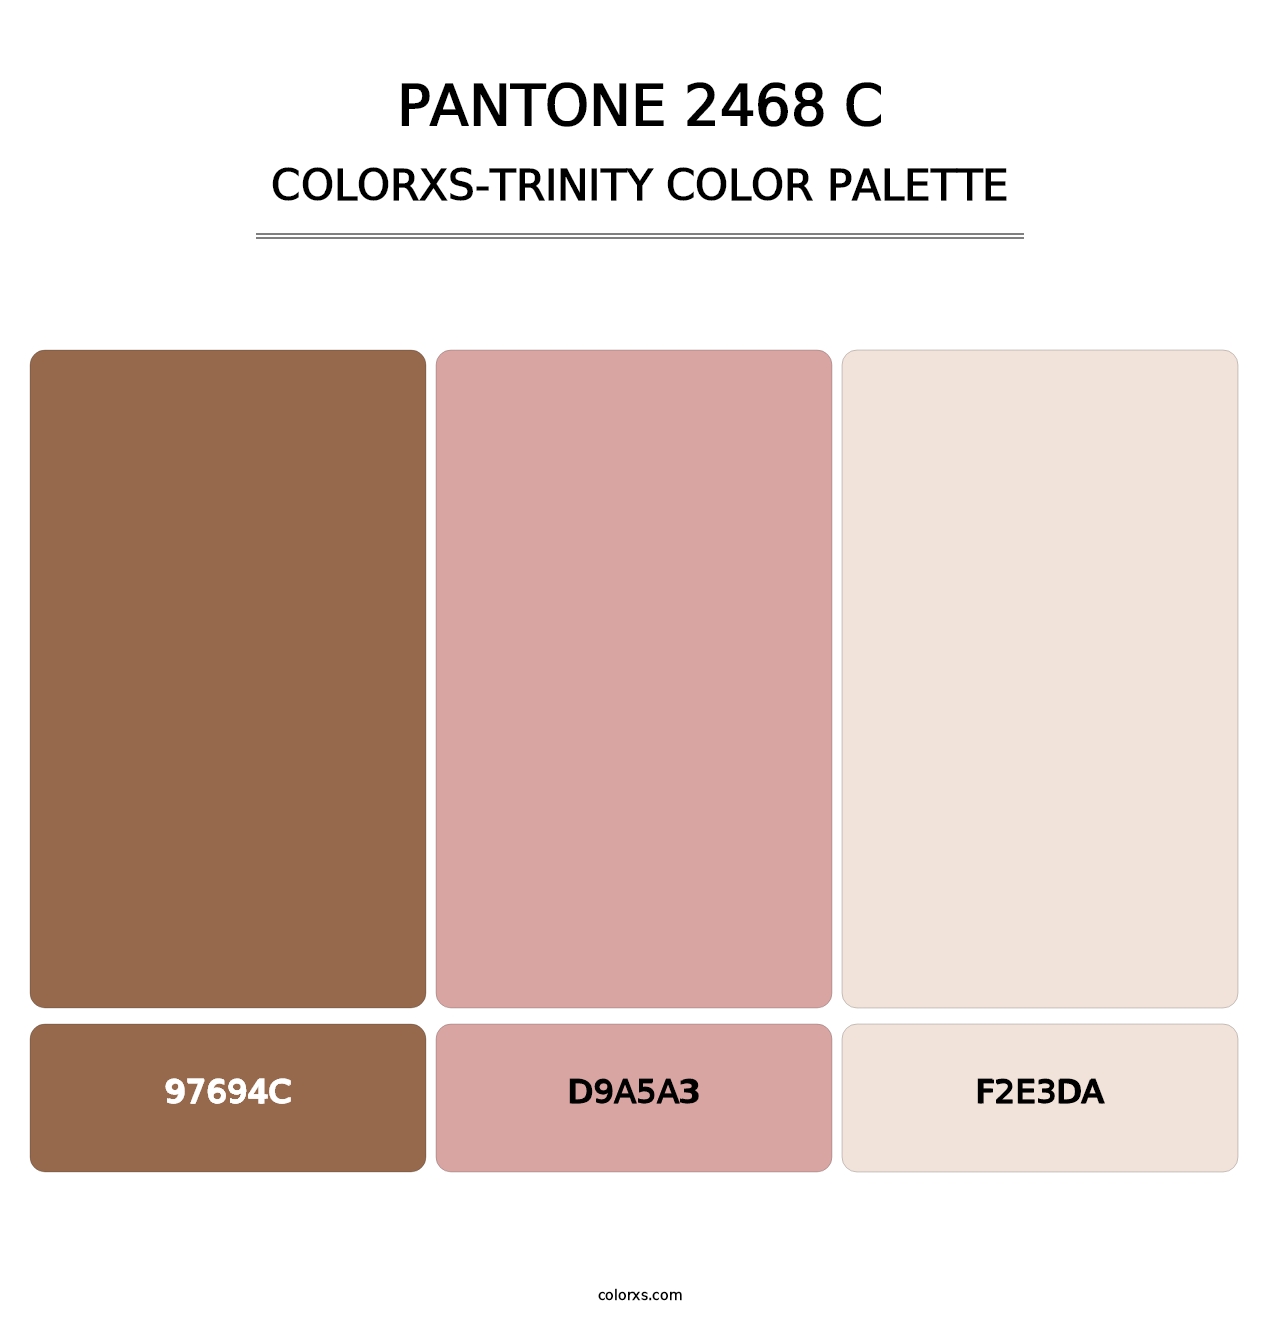 PANTONE 2468 C - Colorxs Trinity Palette